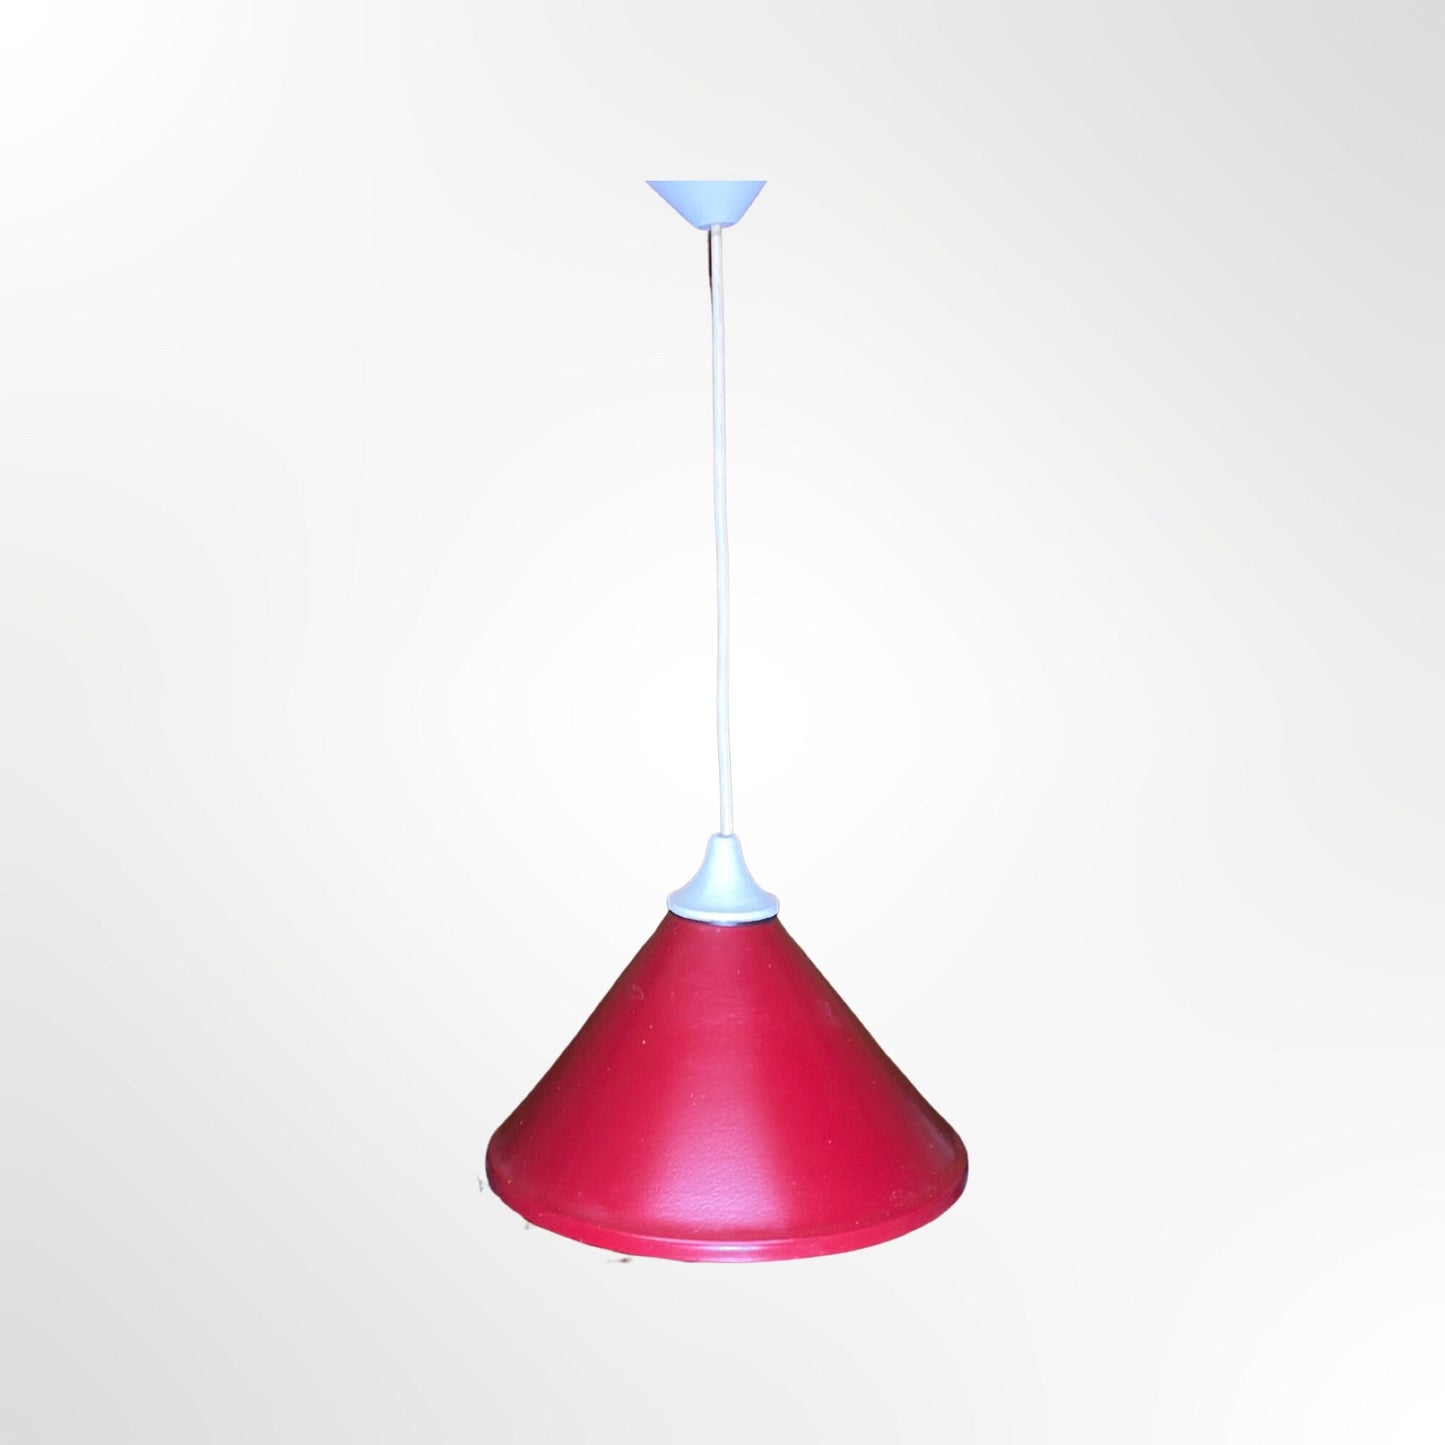 1960s Red Scandinavian Pendant Light - Vintage Hanging Lamp From Denmark -  Scandinavian Modern Vintage Lighting | Width: 9.8 inch / 25 cm